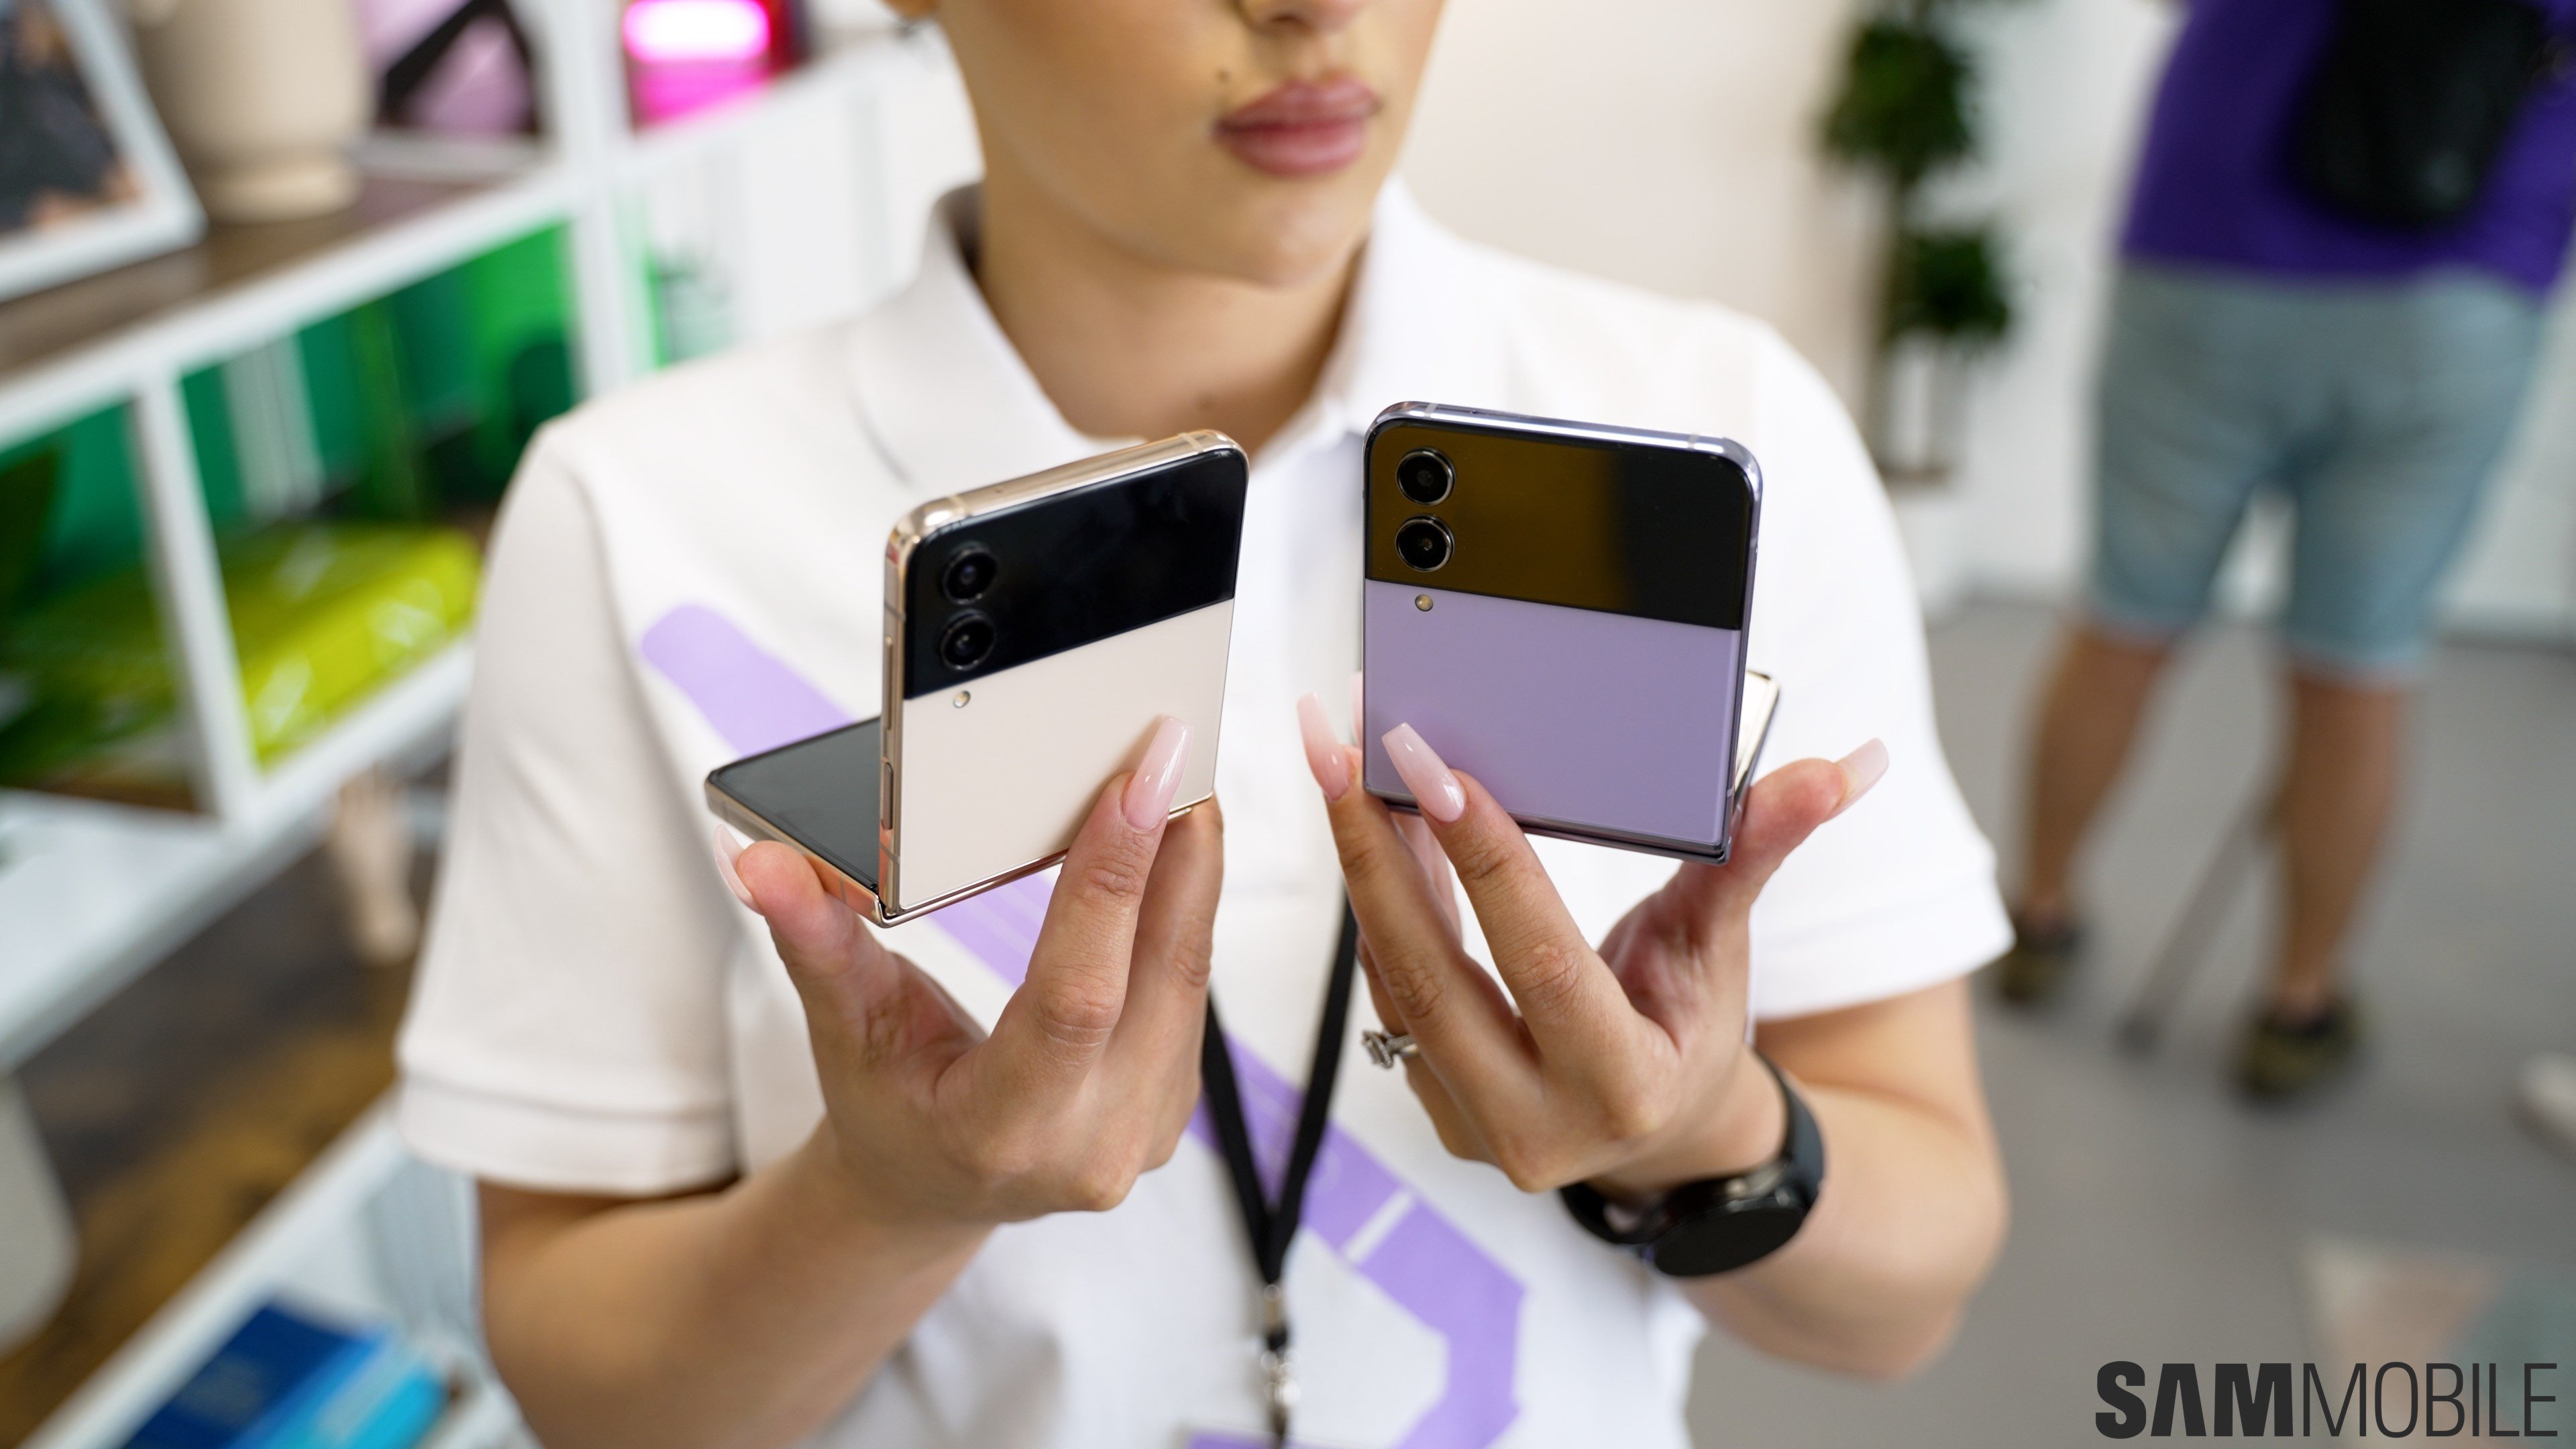 Samsung Galaxy Z Flip 3 5G Sm-f711u 128GB 256GB - Factory Unlocked Cell Phone - Good Condition, Gray